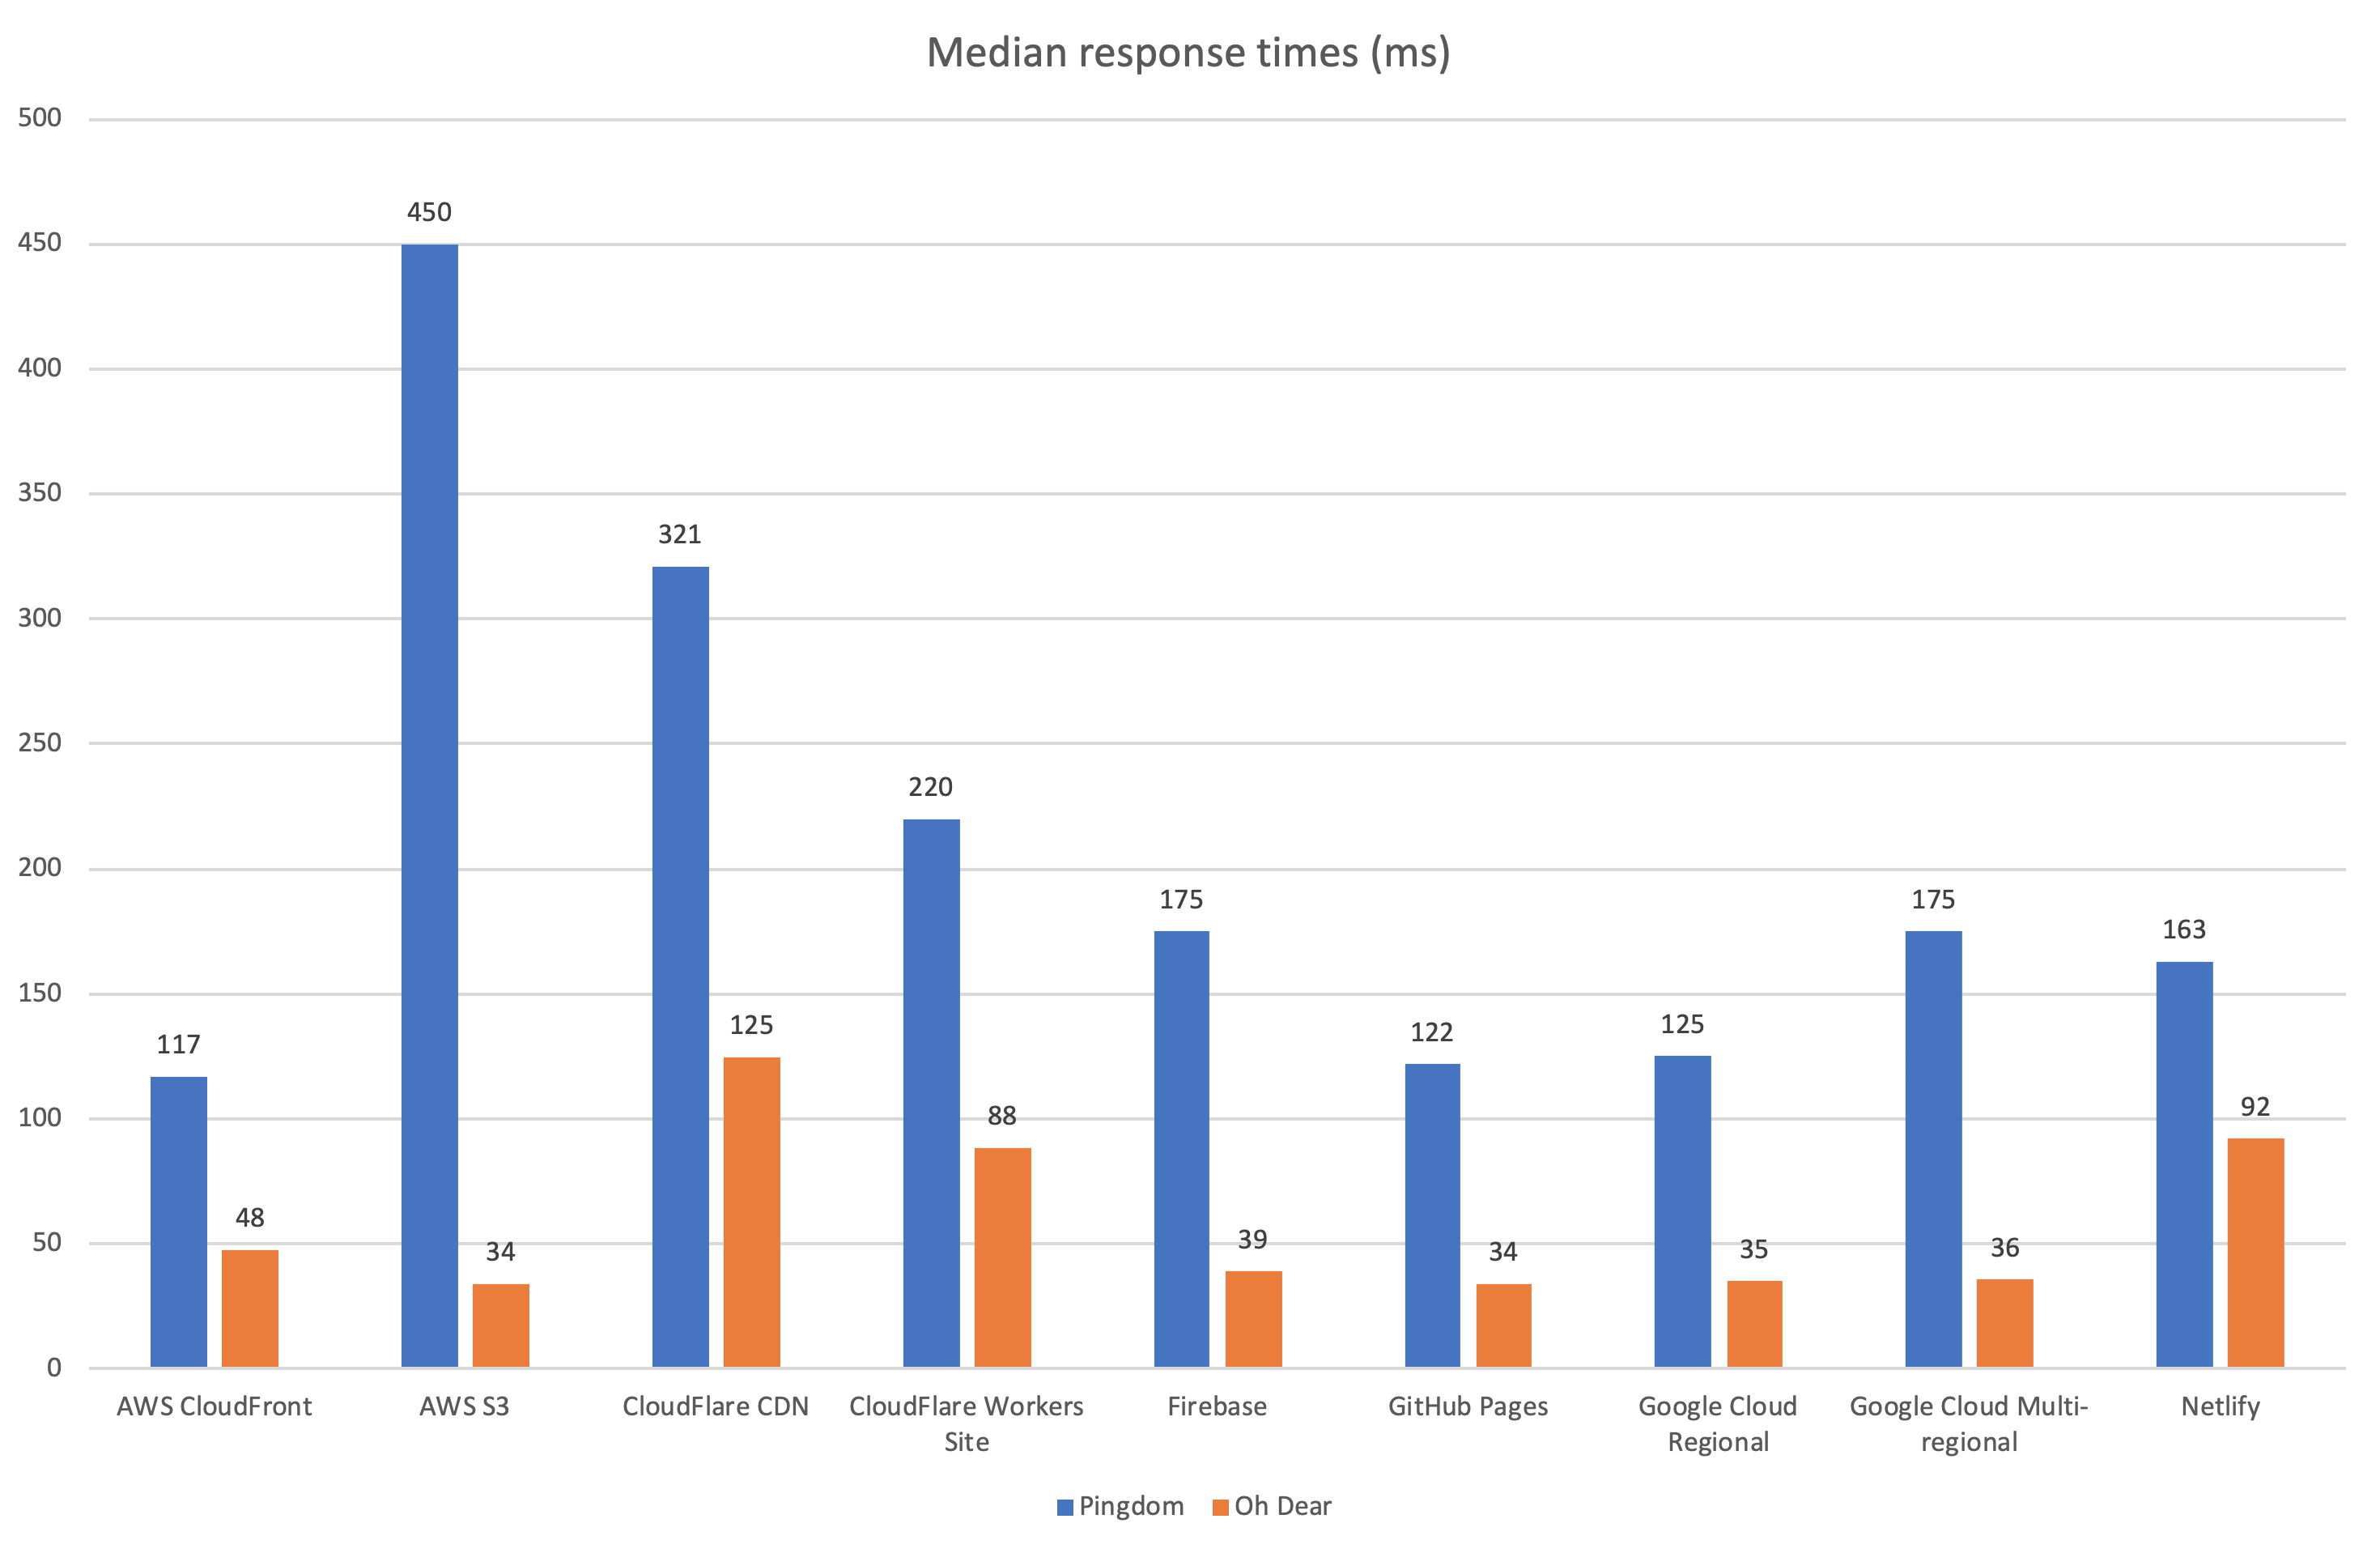 Pingdom vs Oh Dear (median response times)